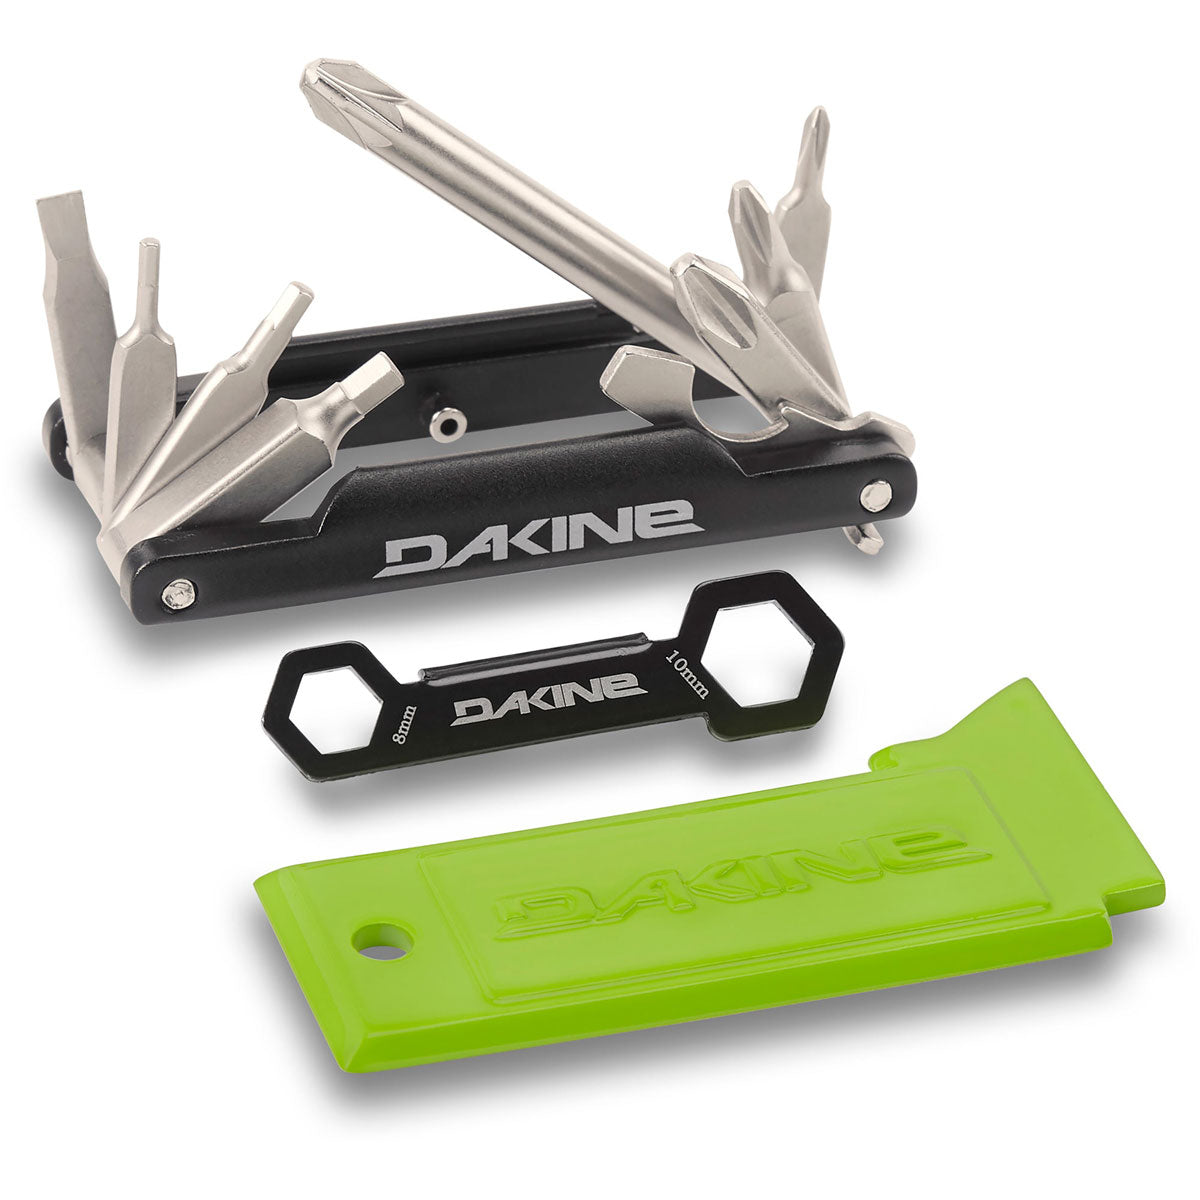 Dakine Bc Snowboard Tools & Locks - Green image 3